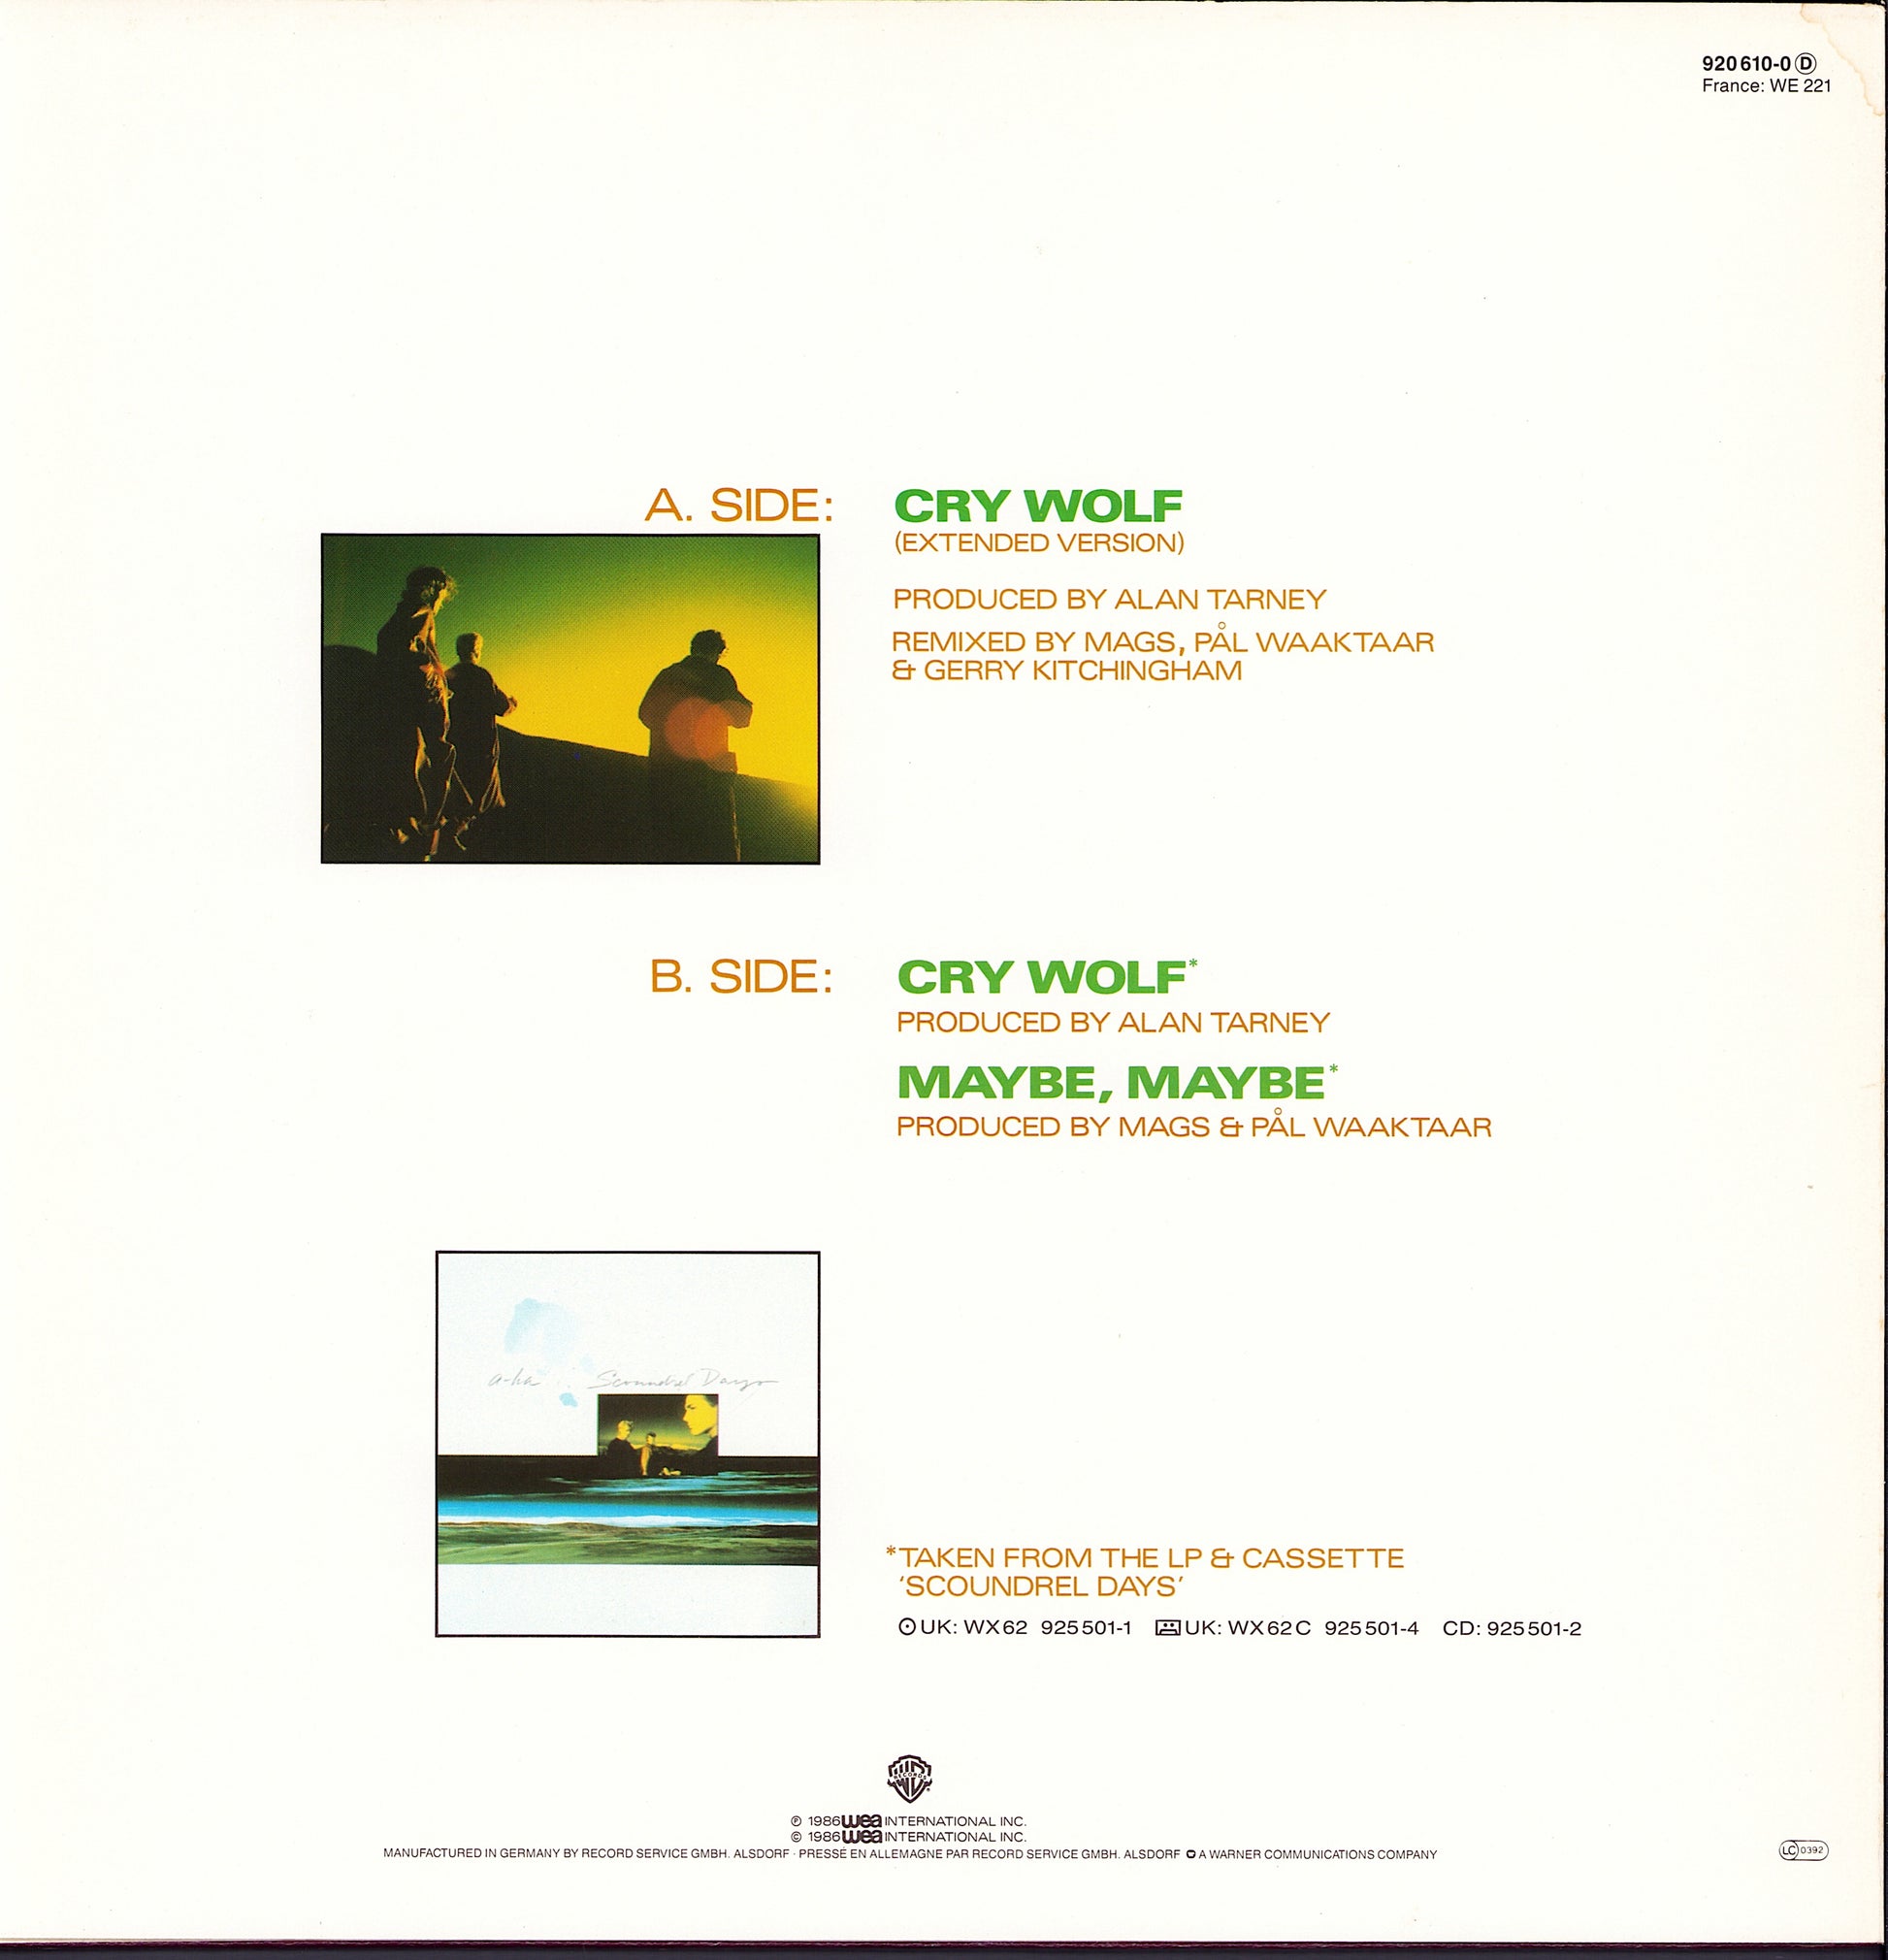 A-ha - Cry Wolf Extended Version Vinyl 12" Maxi-Single